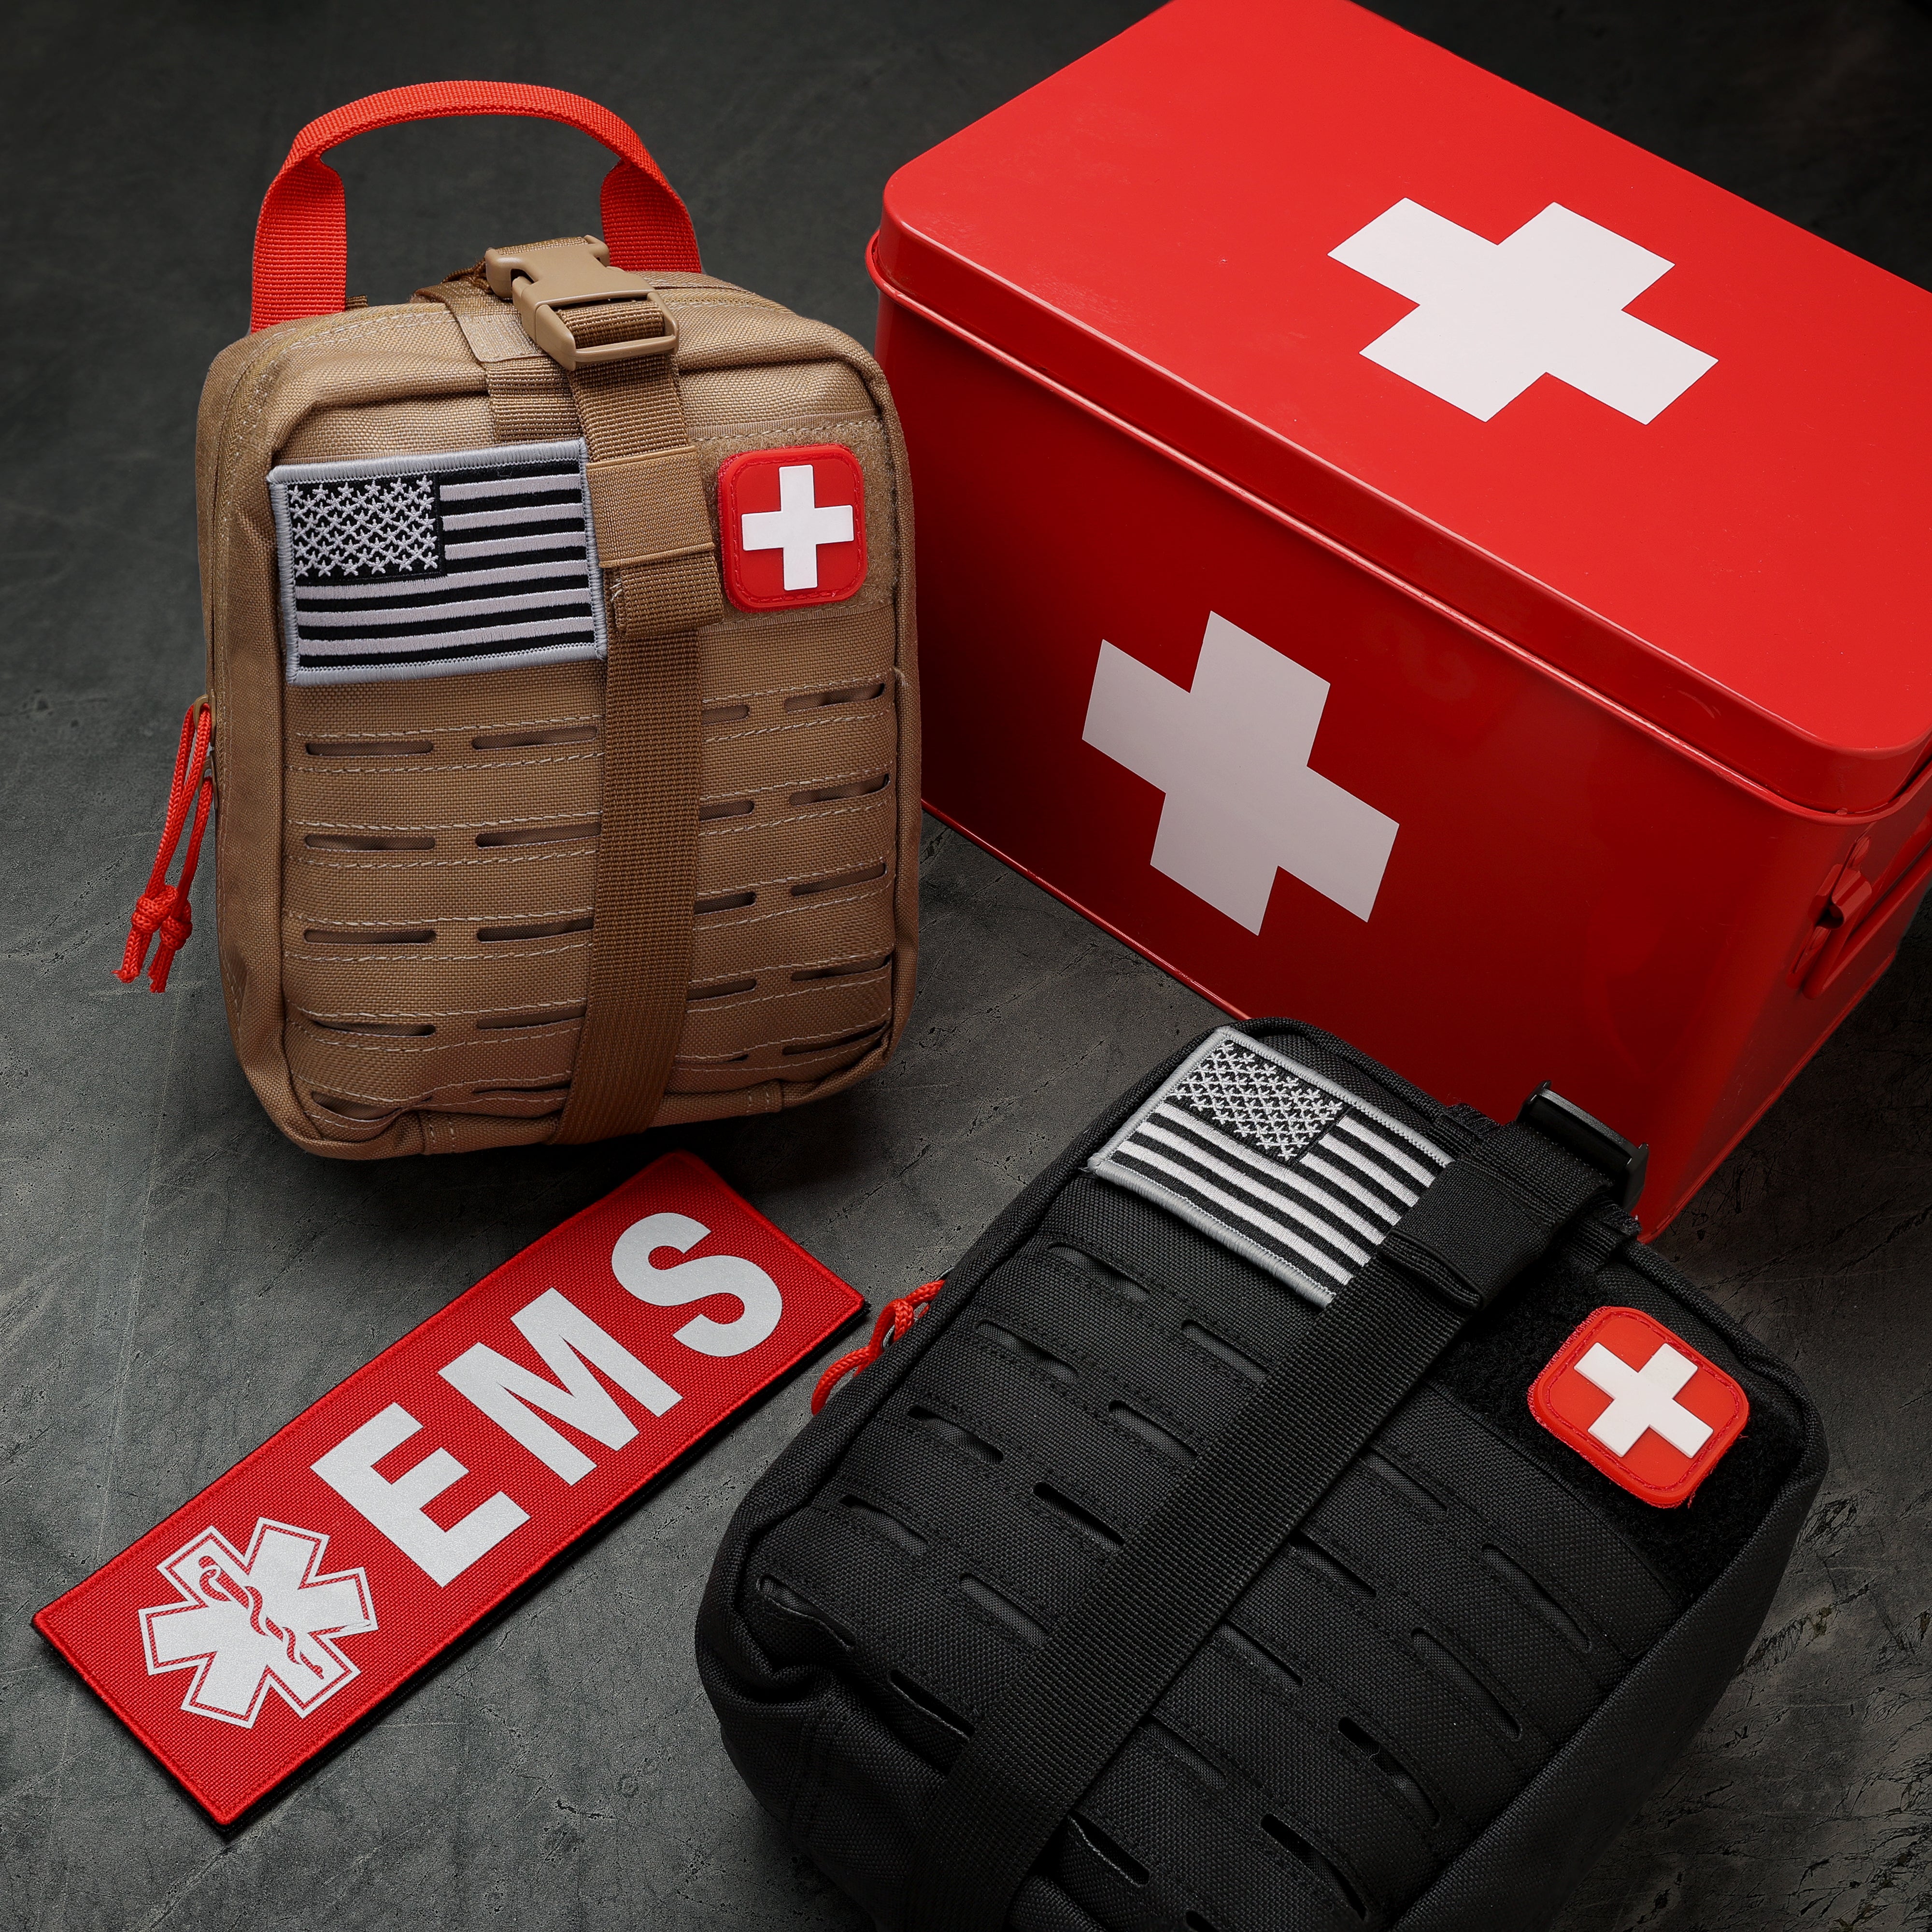 LakeForest Emergency Survival Kit Survival Gear Equipment First Aid Kit  (47pcs)